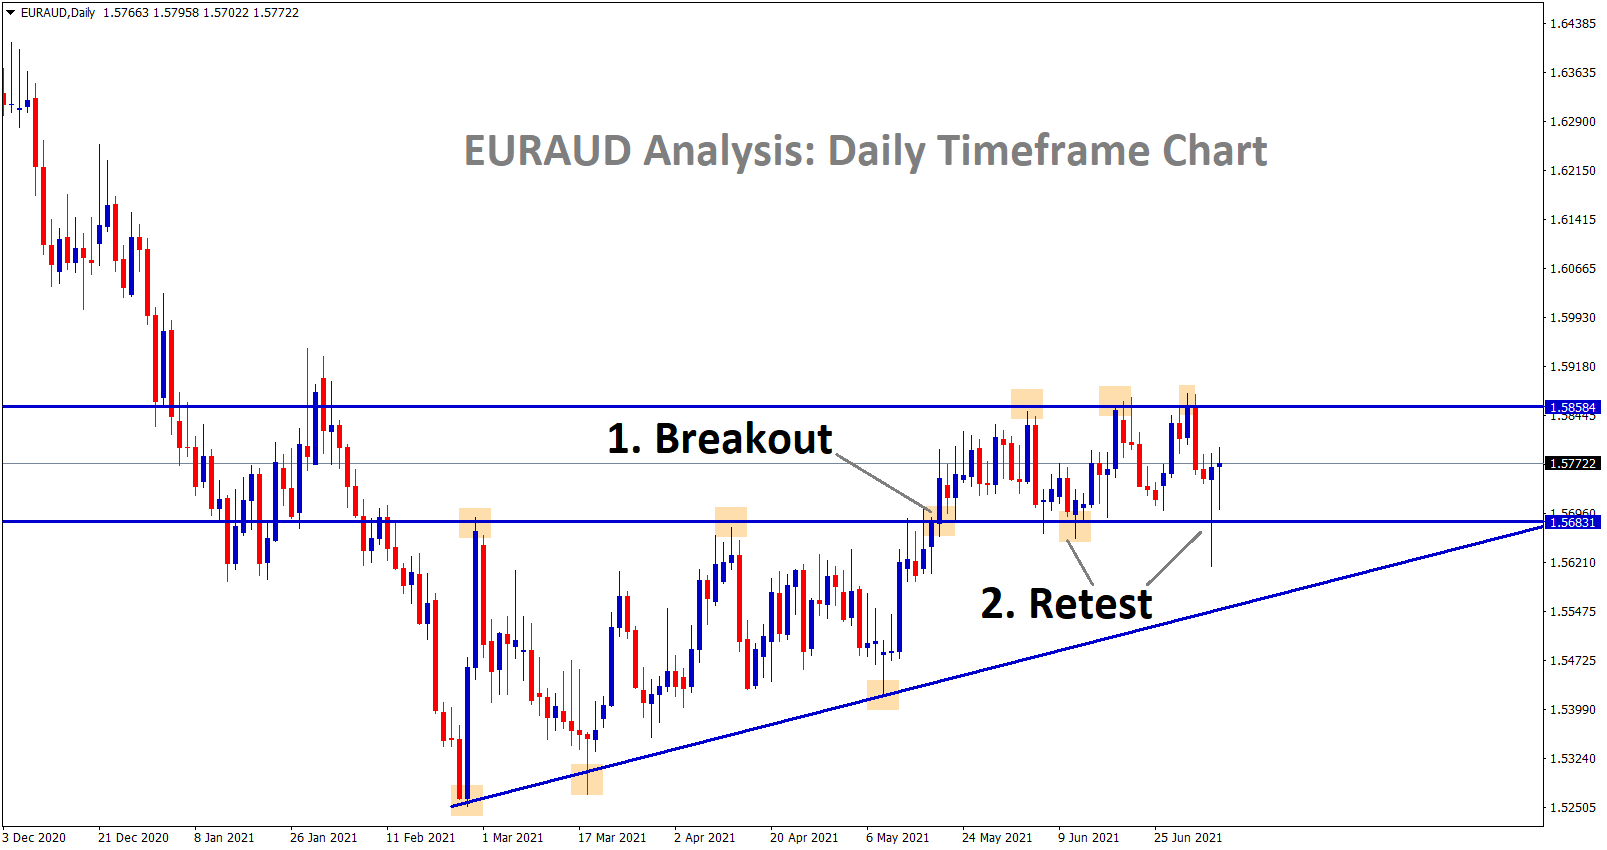 EURAUD breakout and Retest scenario happening